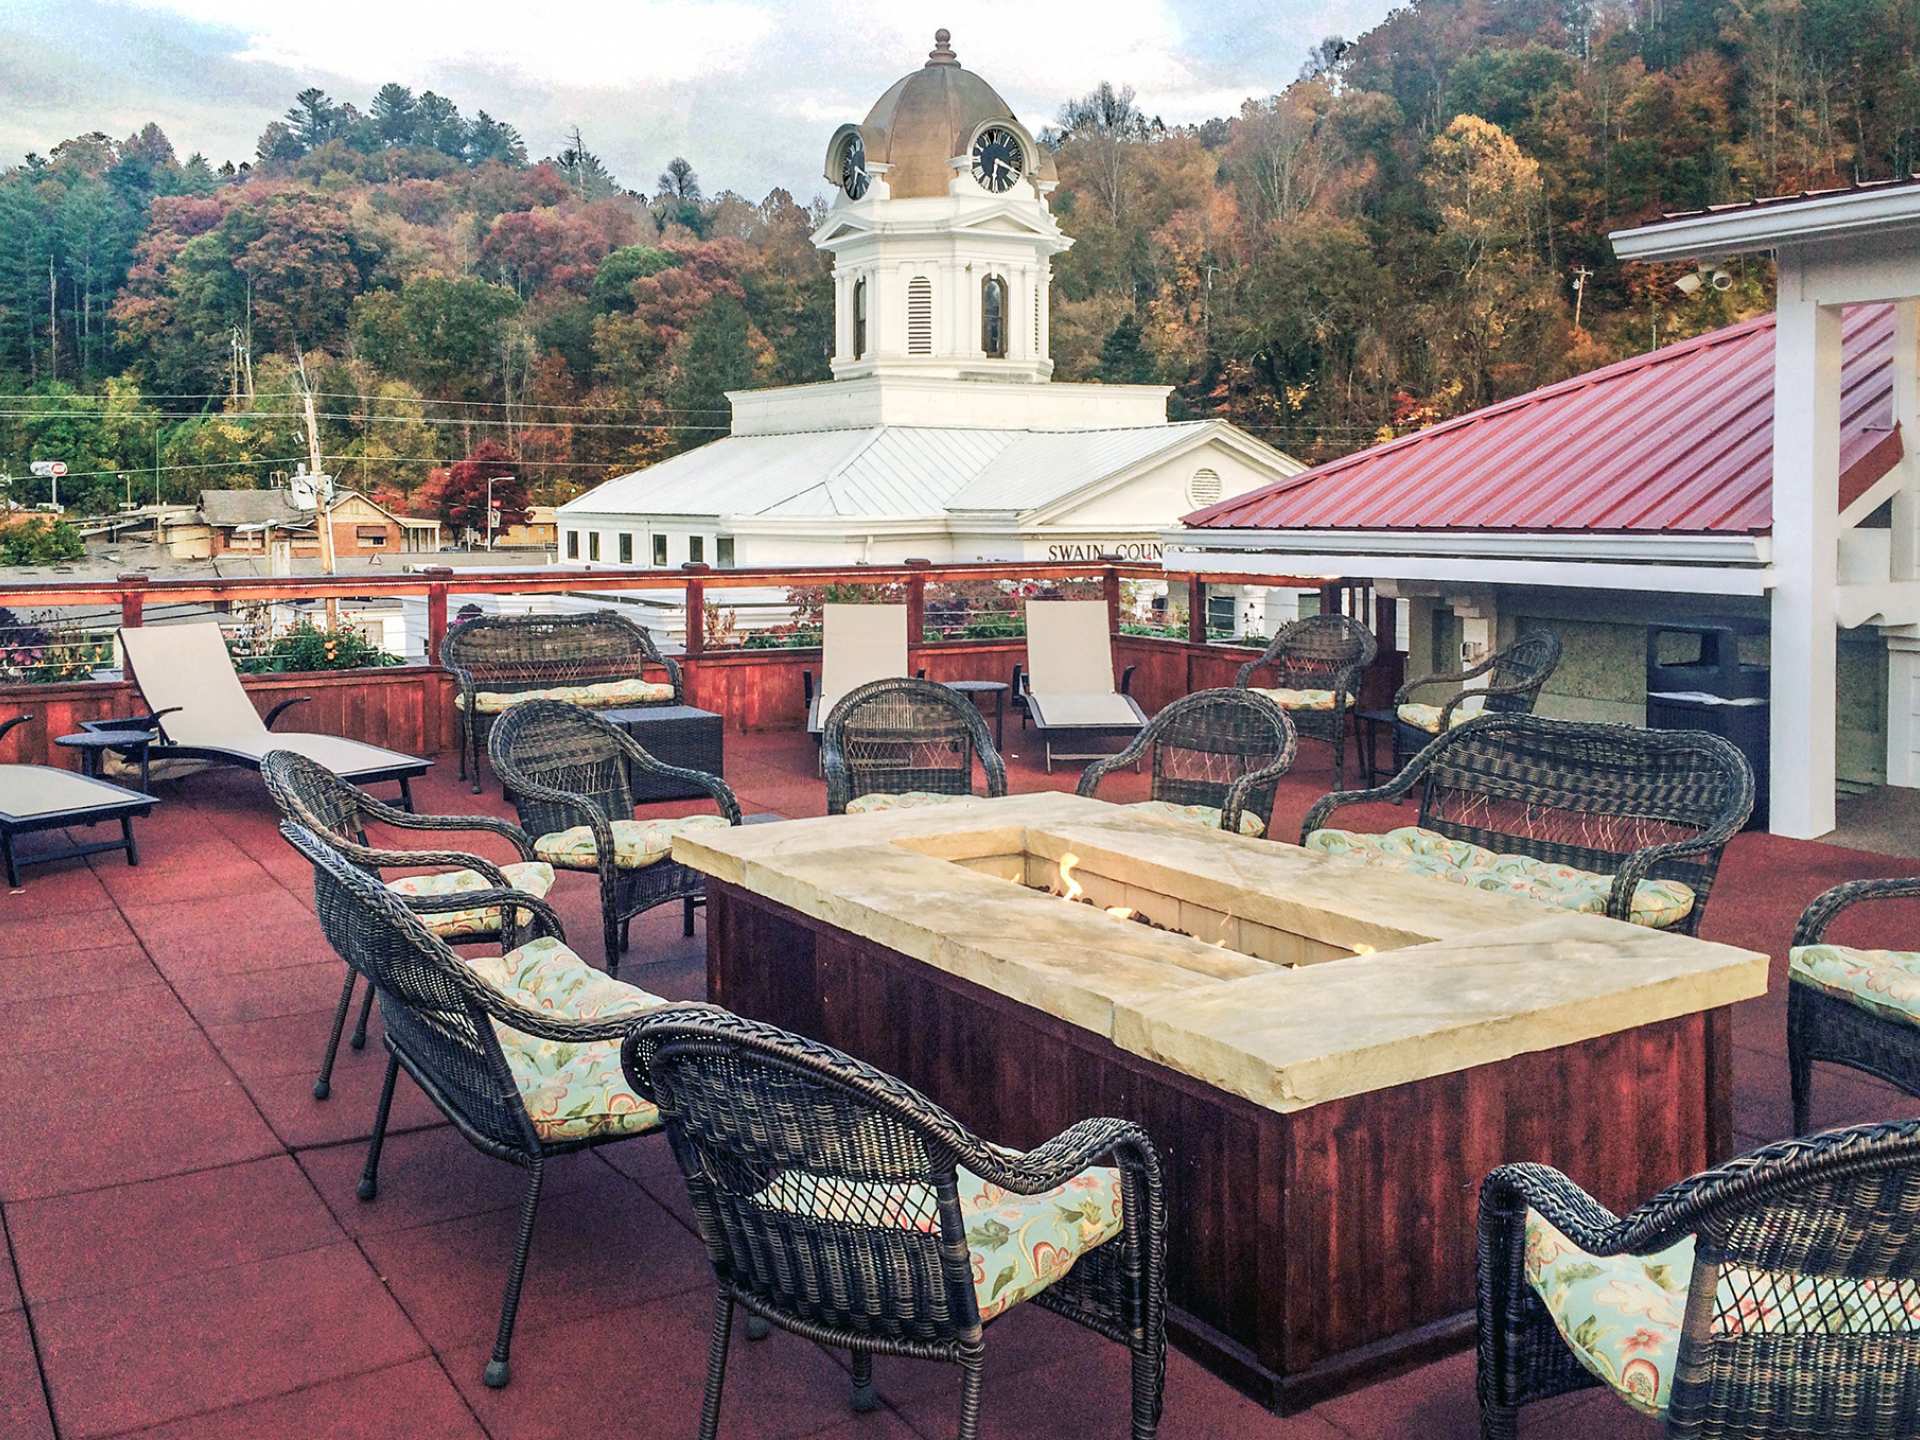 North Carolina | The rooftop terrace at The Everett Hotel in Bryson City, North Carolina